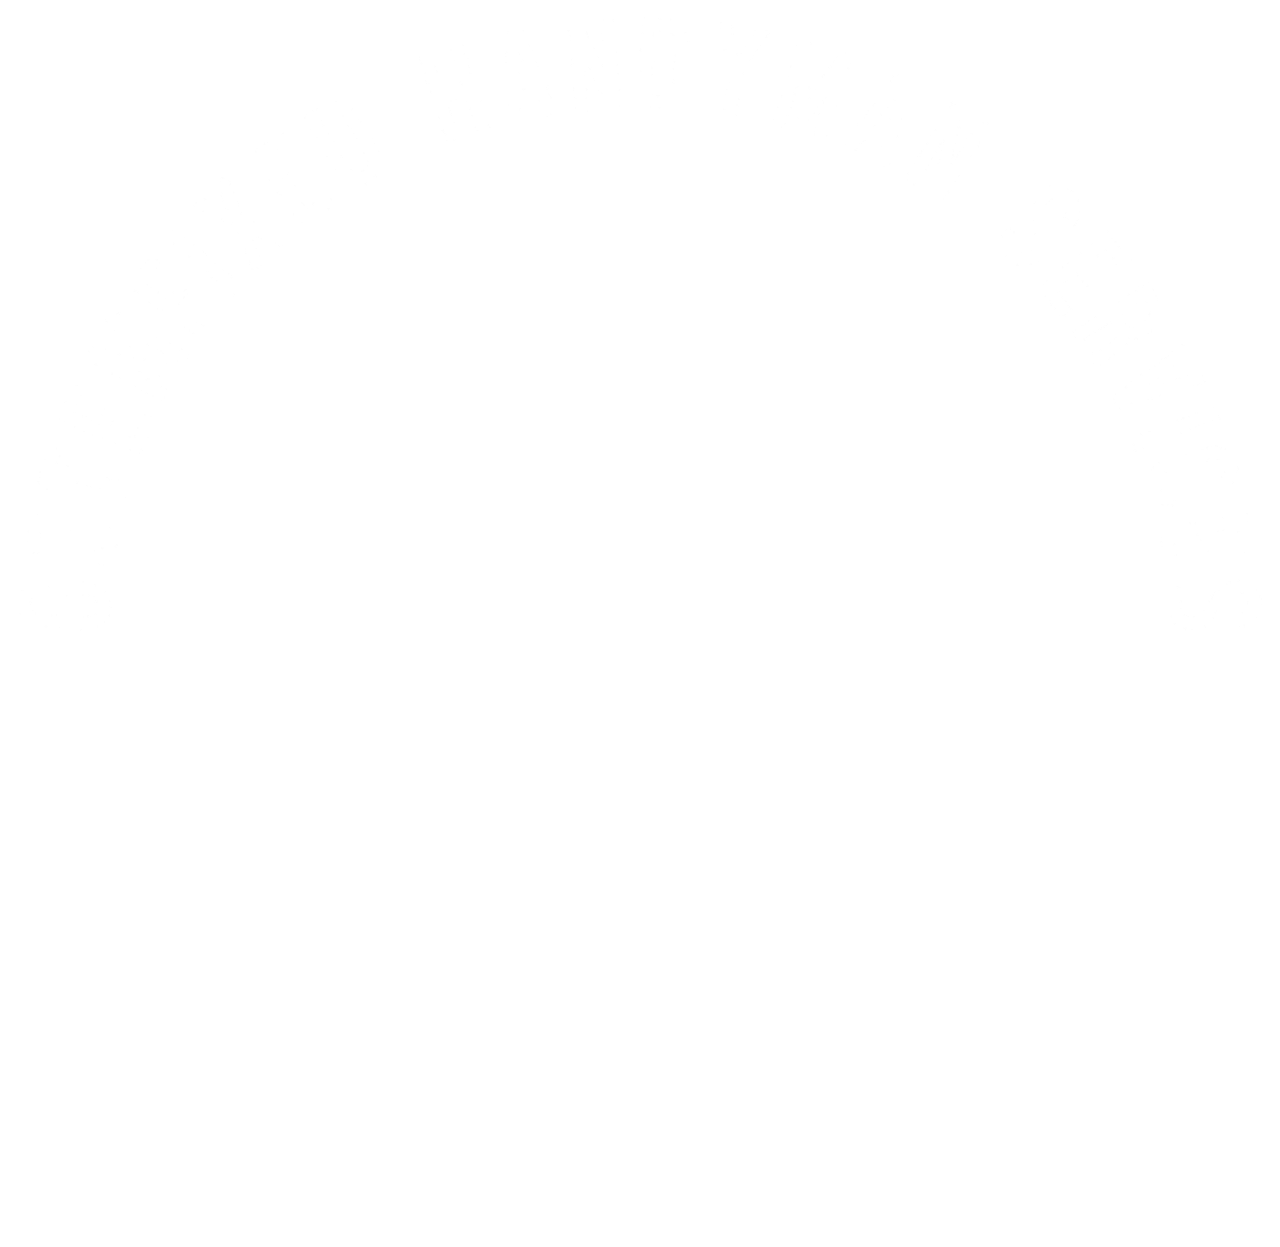 GetEmFixed handyman services's web page